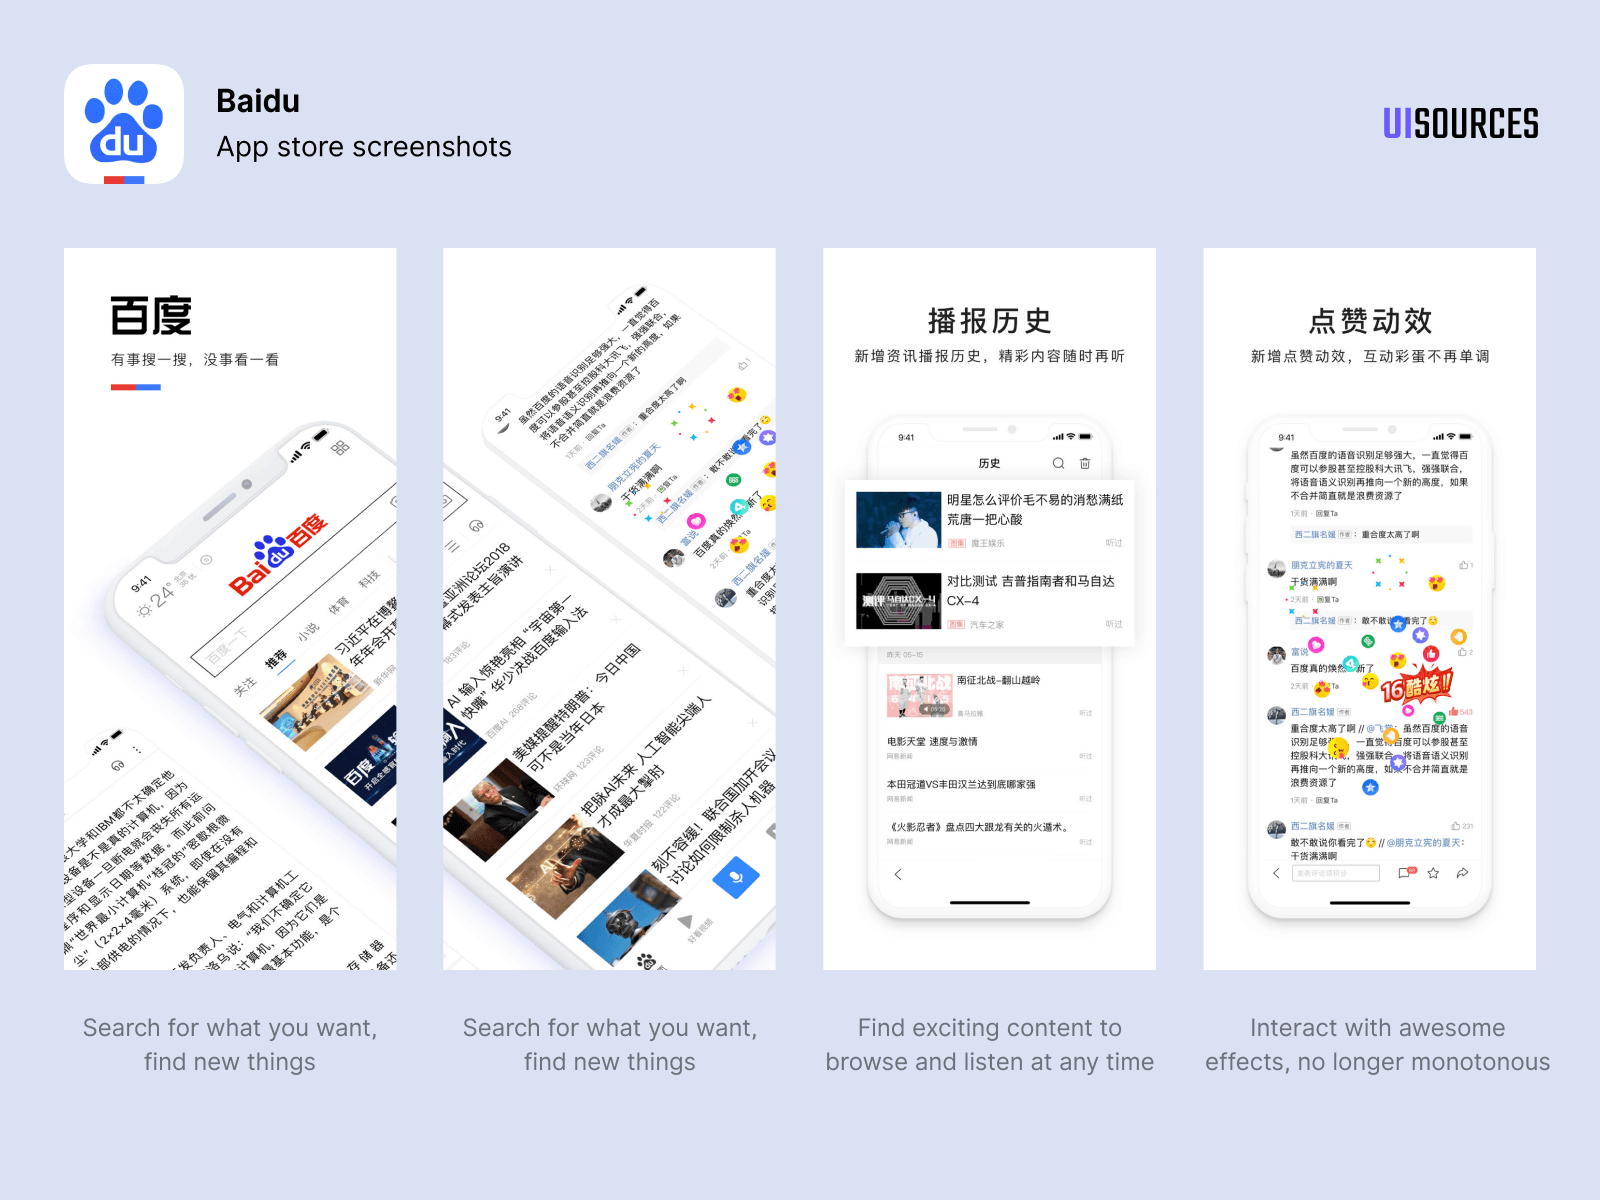 Baidu App Logo - Baidu (百度) engine and news